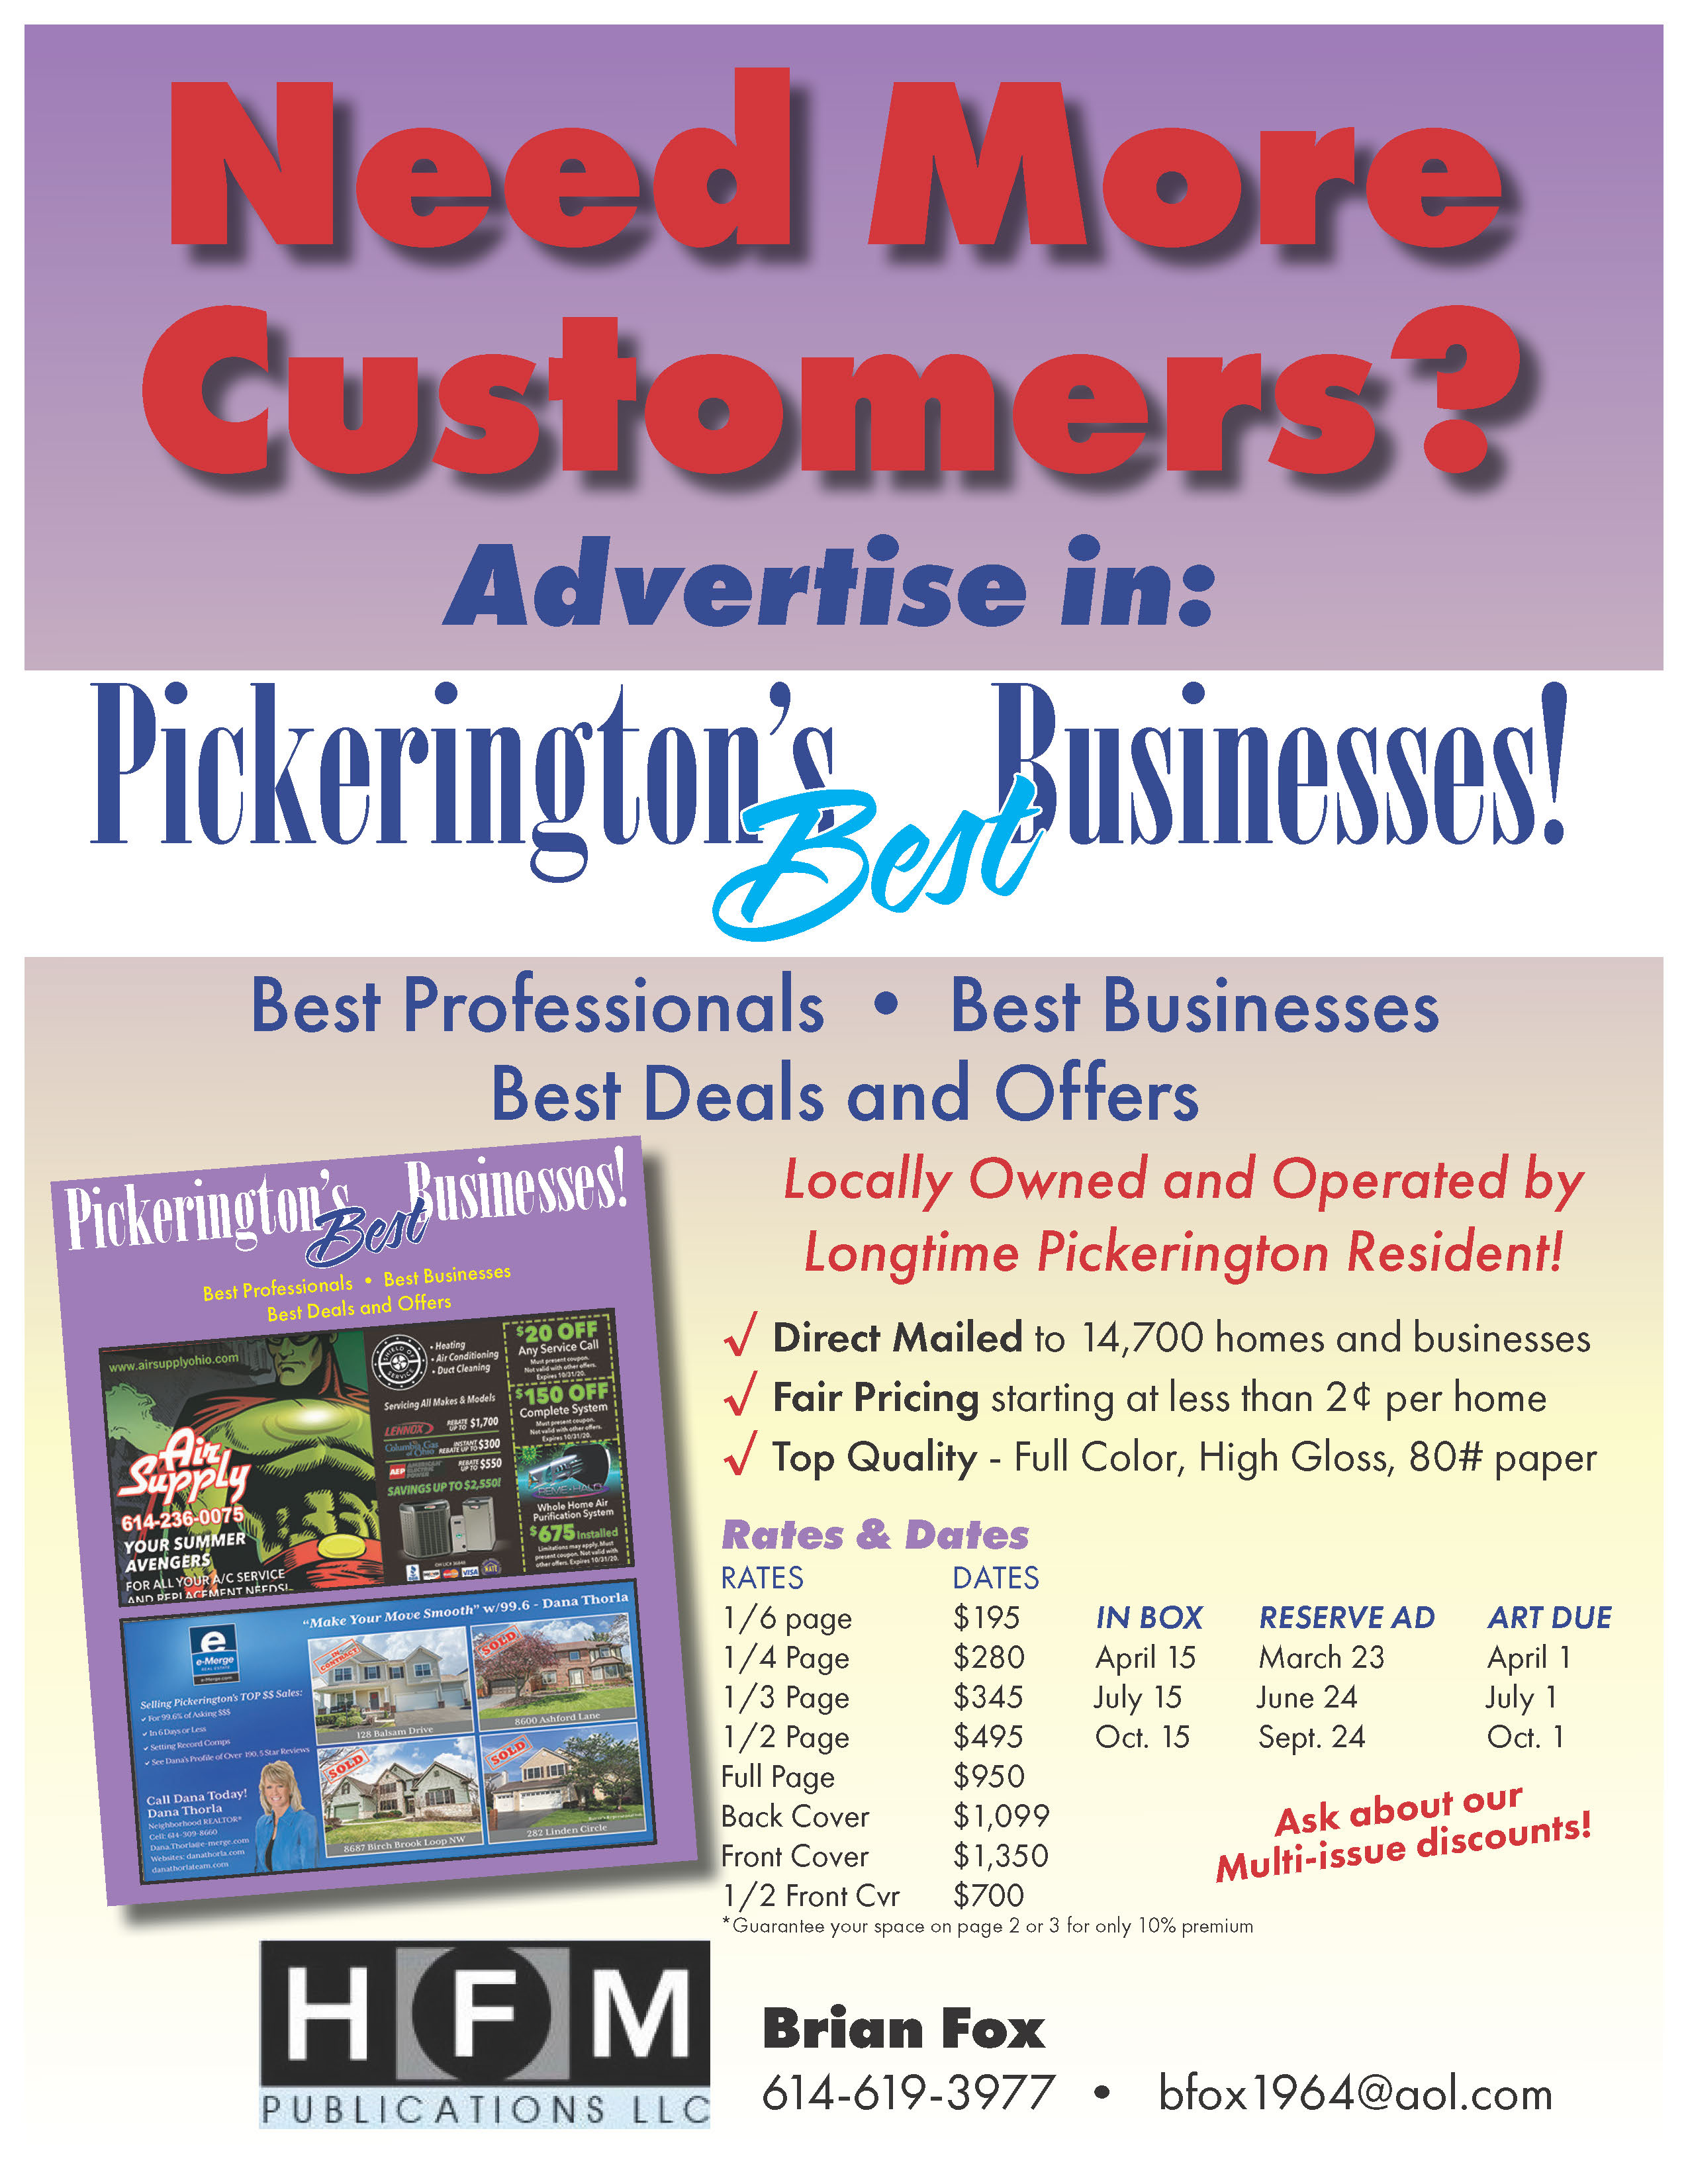 Pickerington's BEST! Magazine